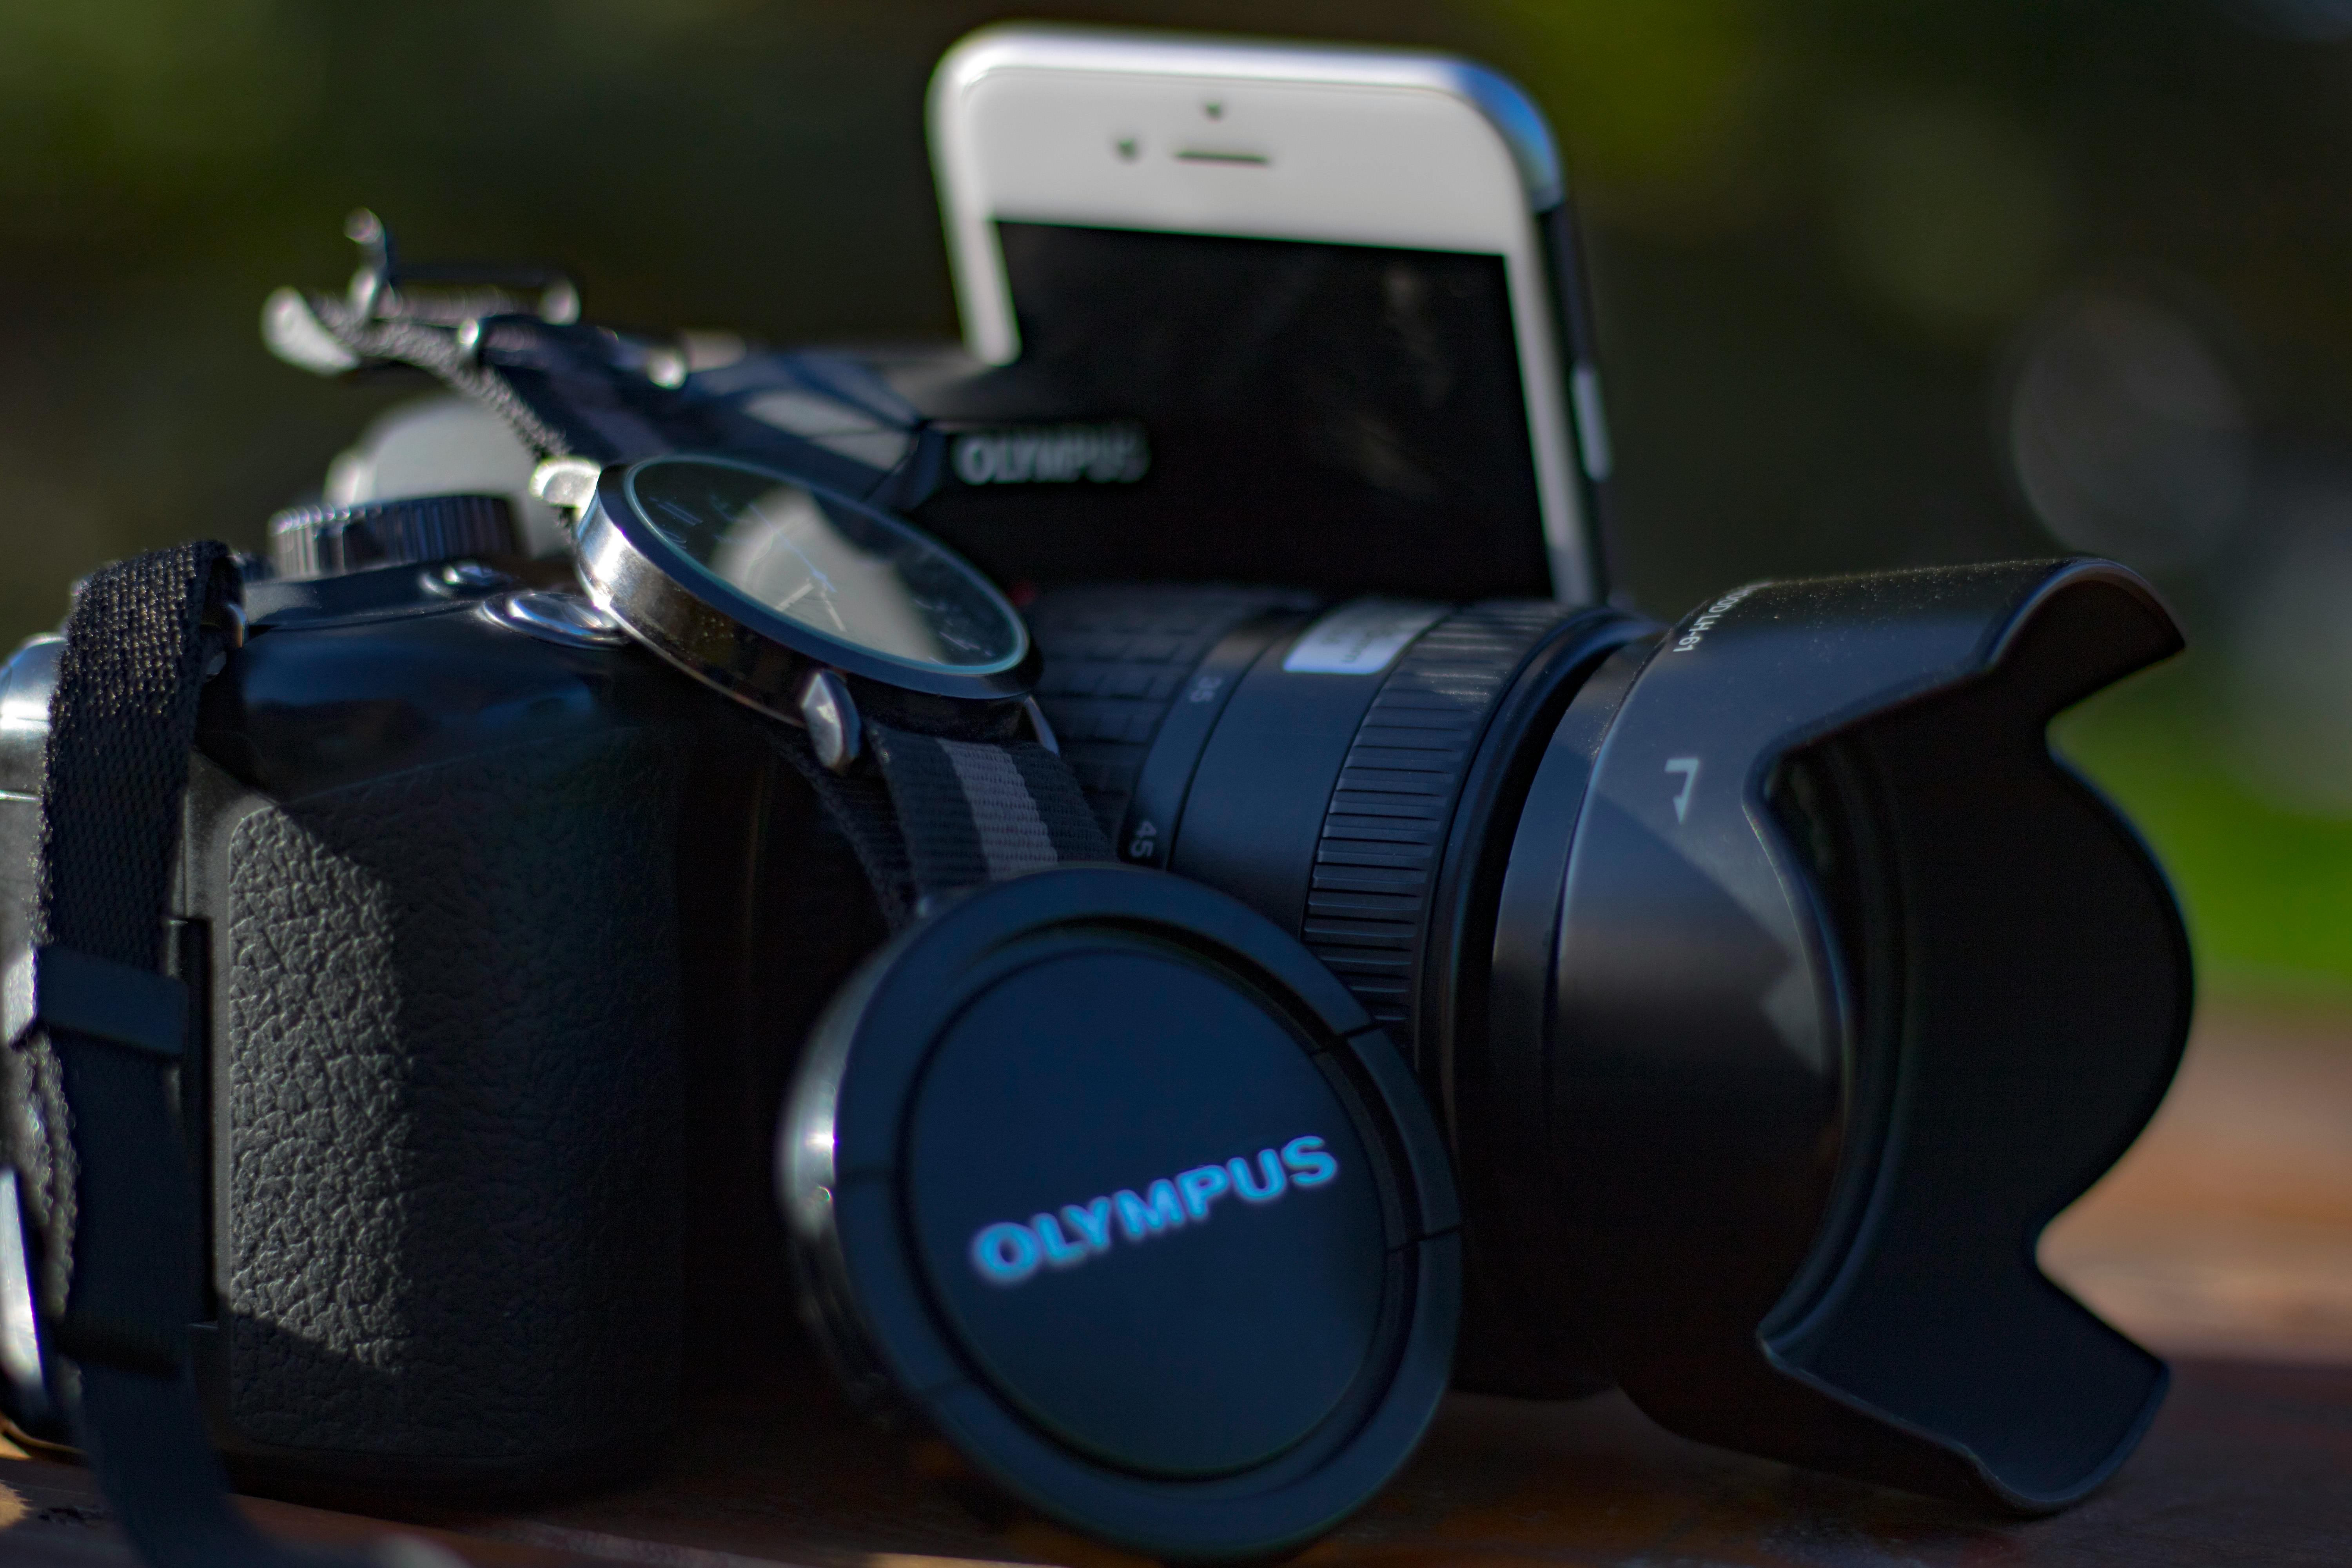 Black Olympus Dslr Camera Beside Silver Iphone 6